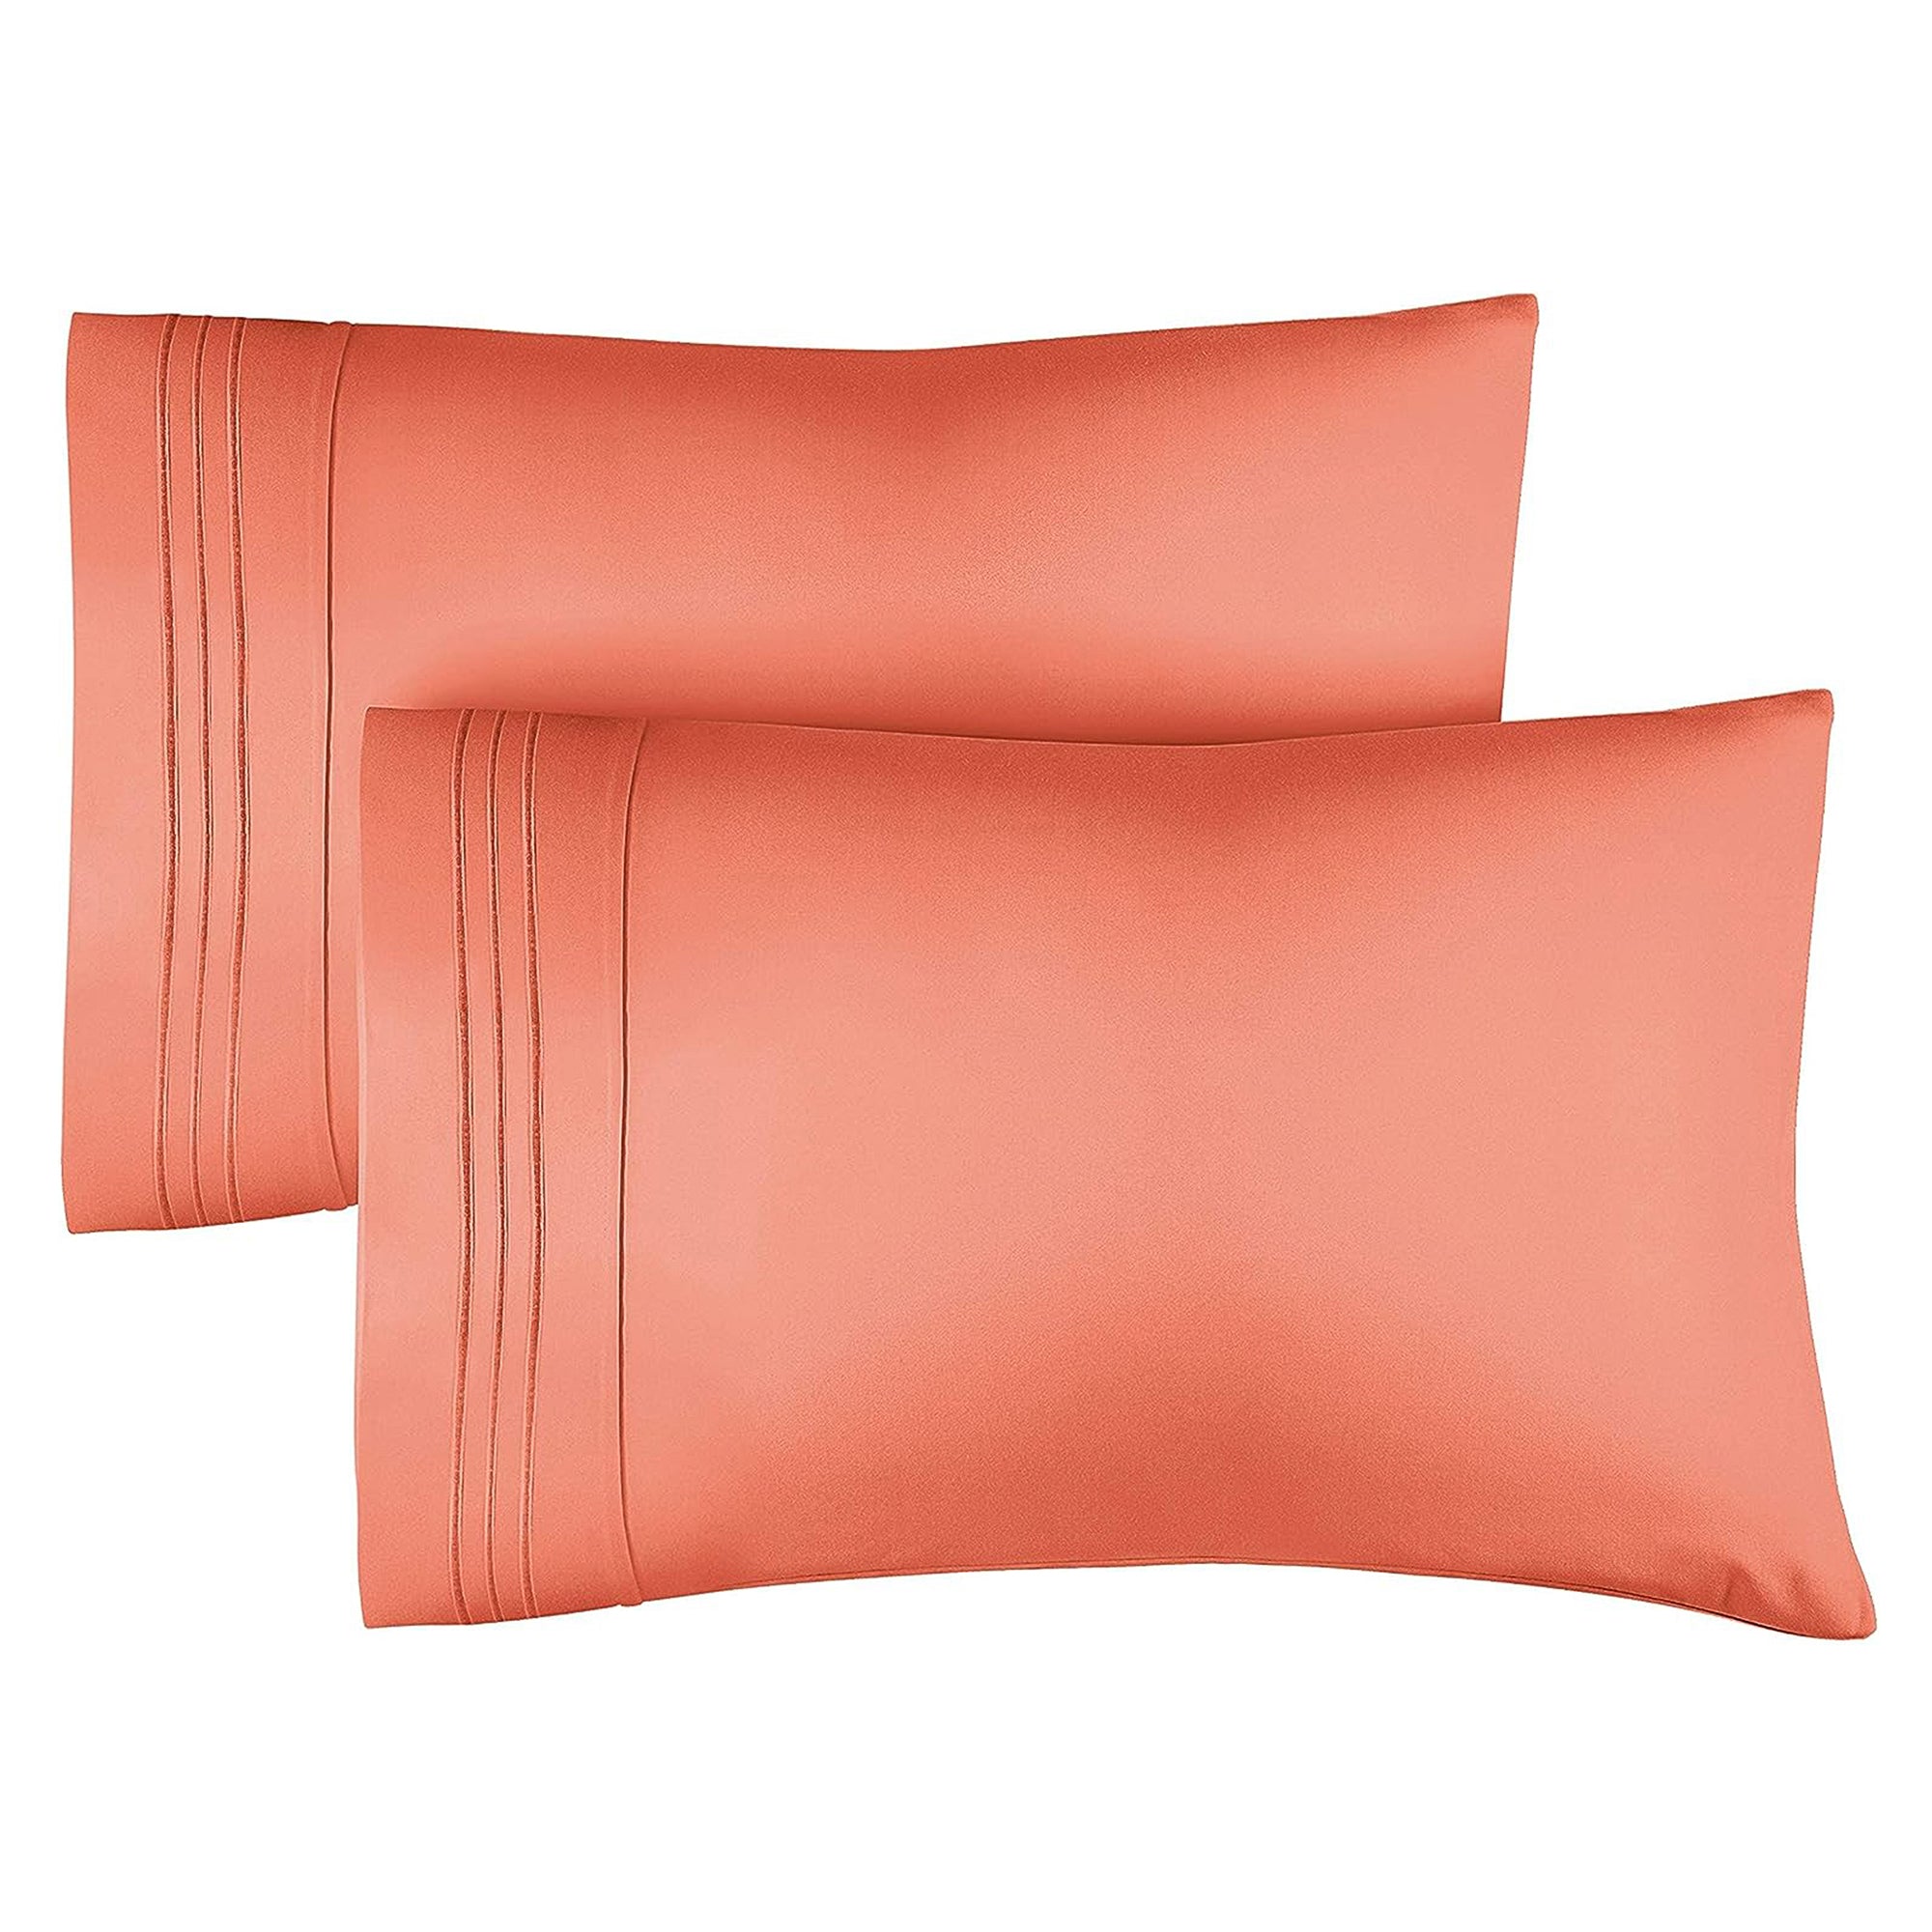 tes 2 Pillowcase Set - Coral